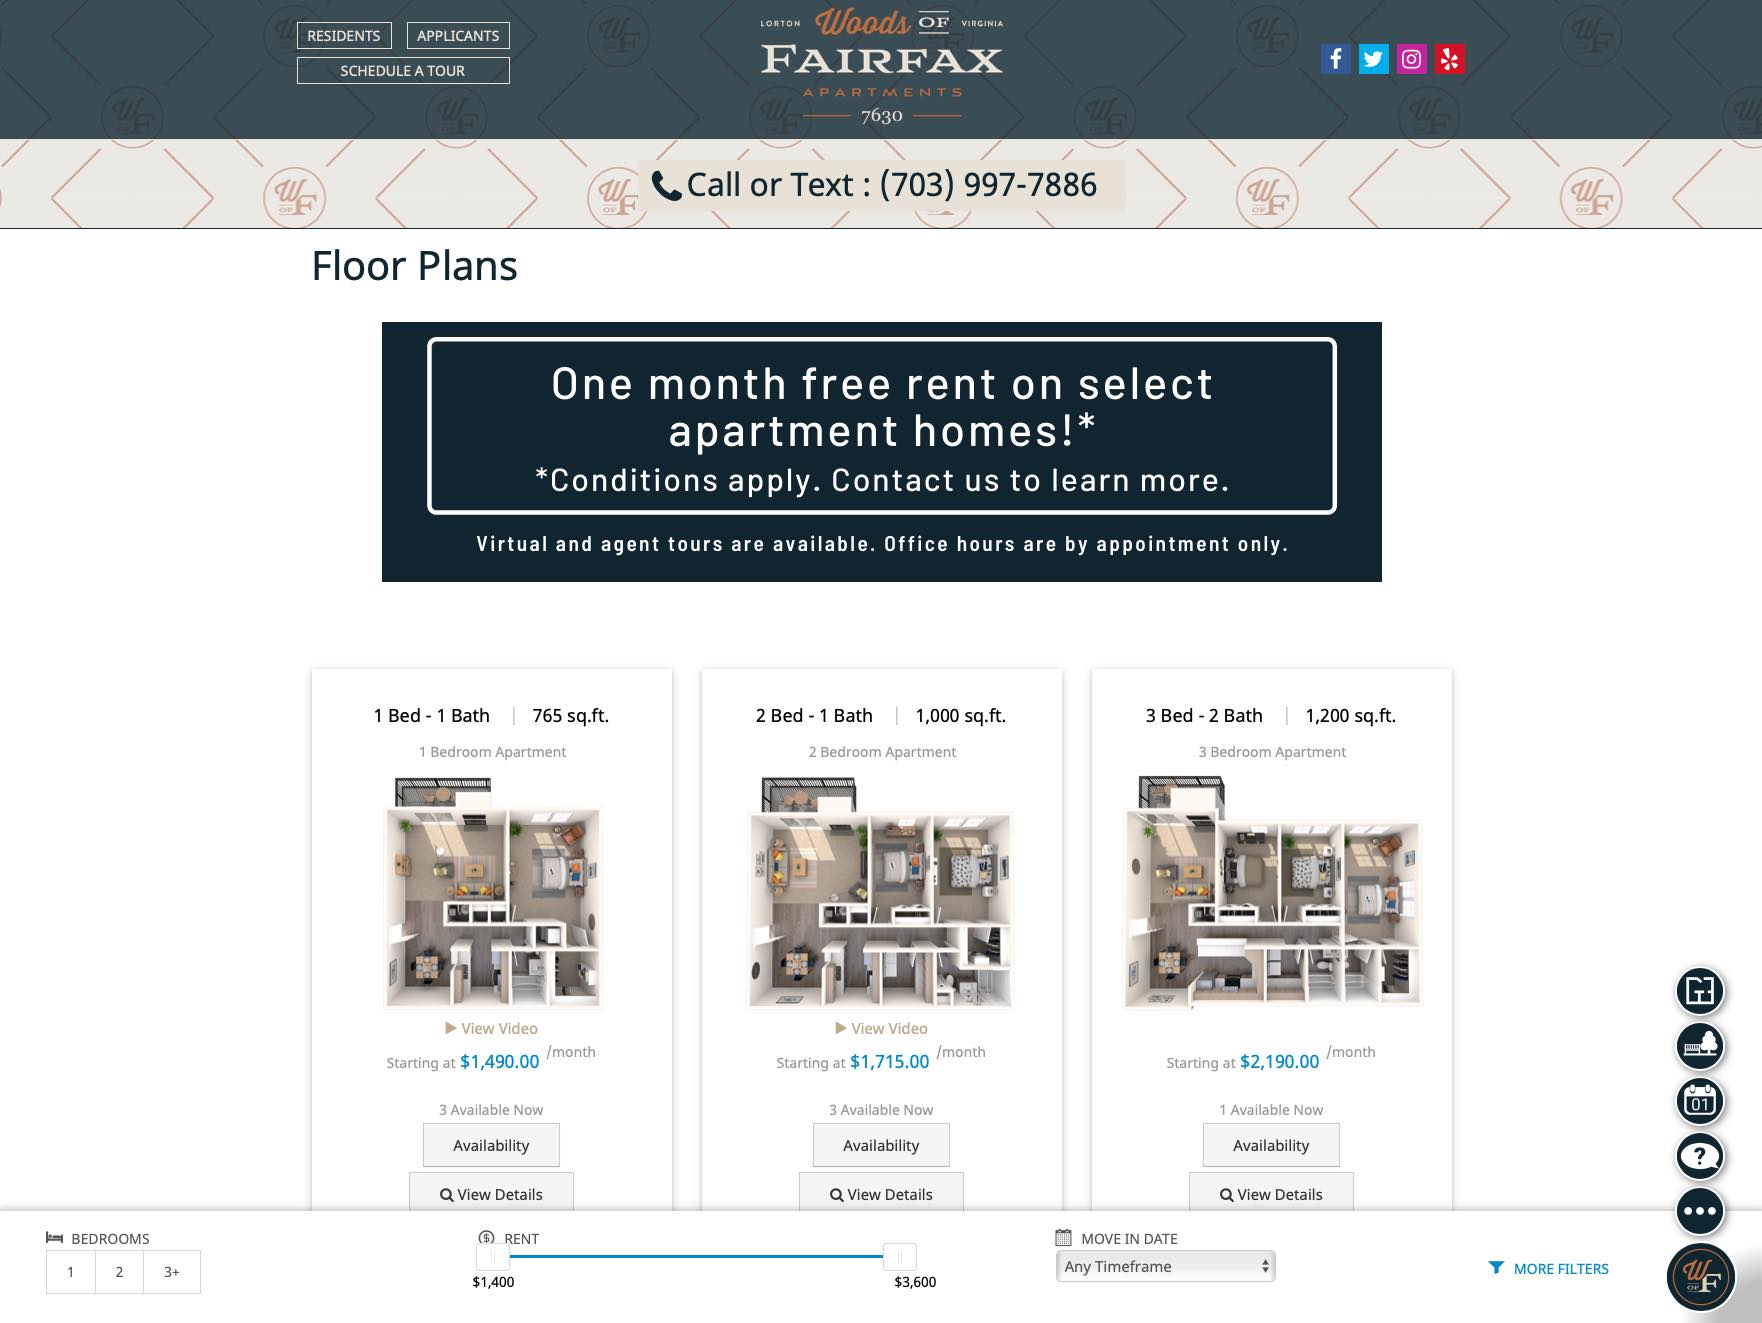 woods of fairfax appartments website design